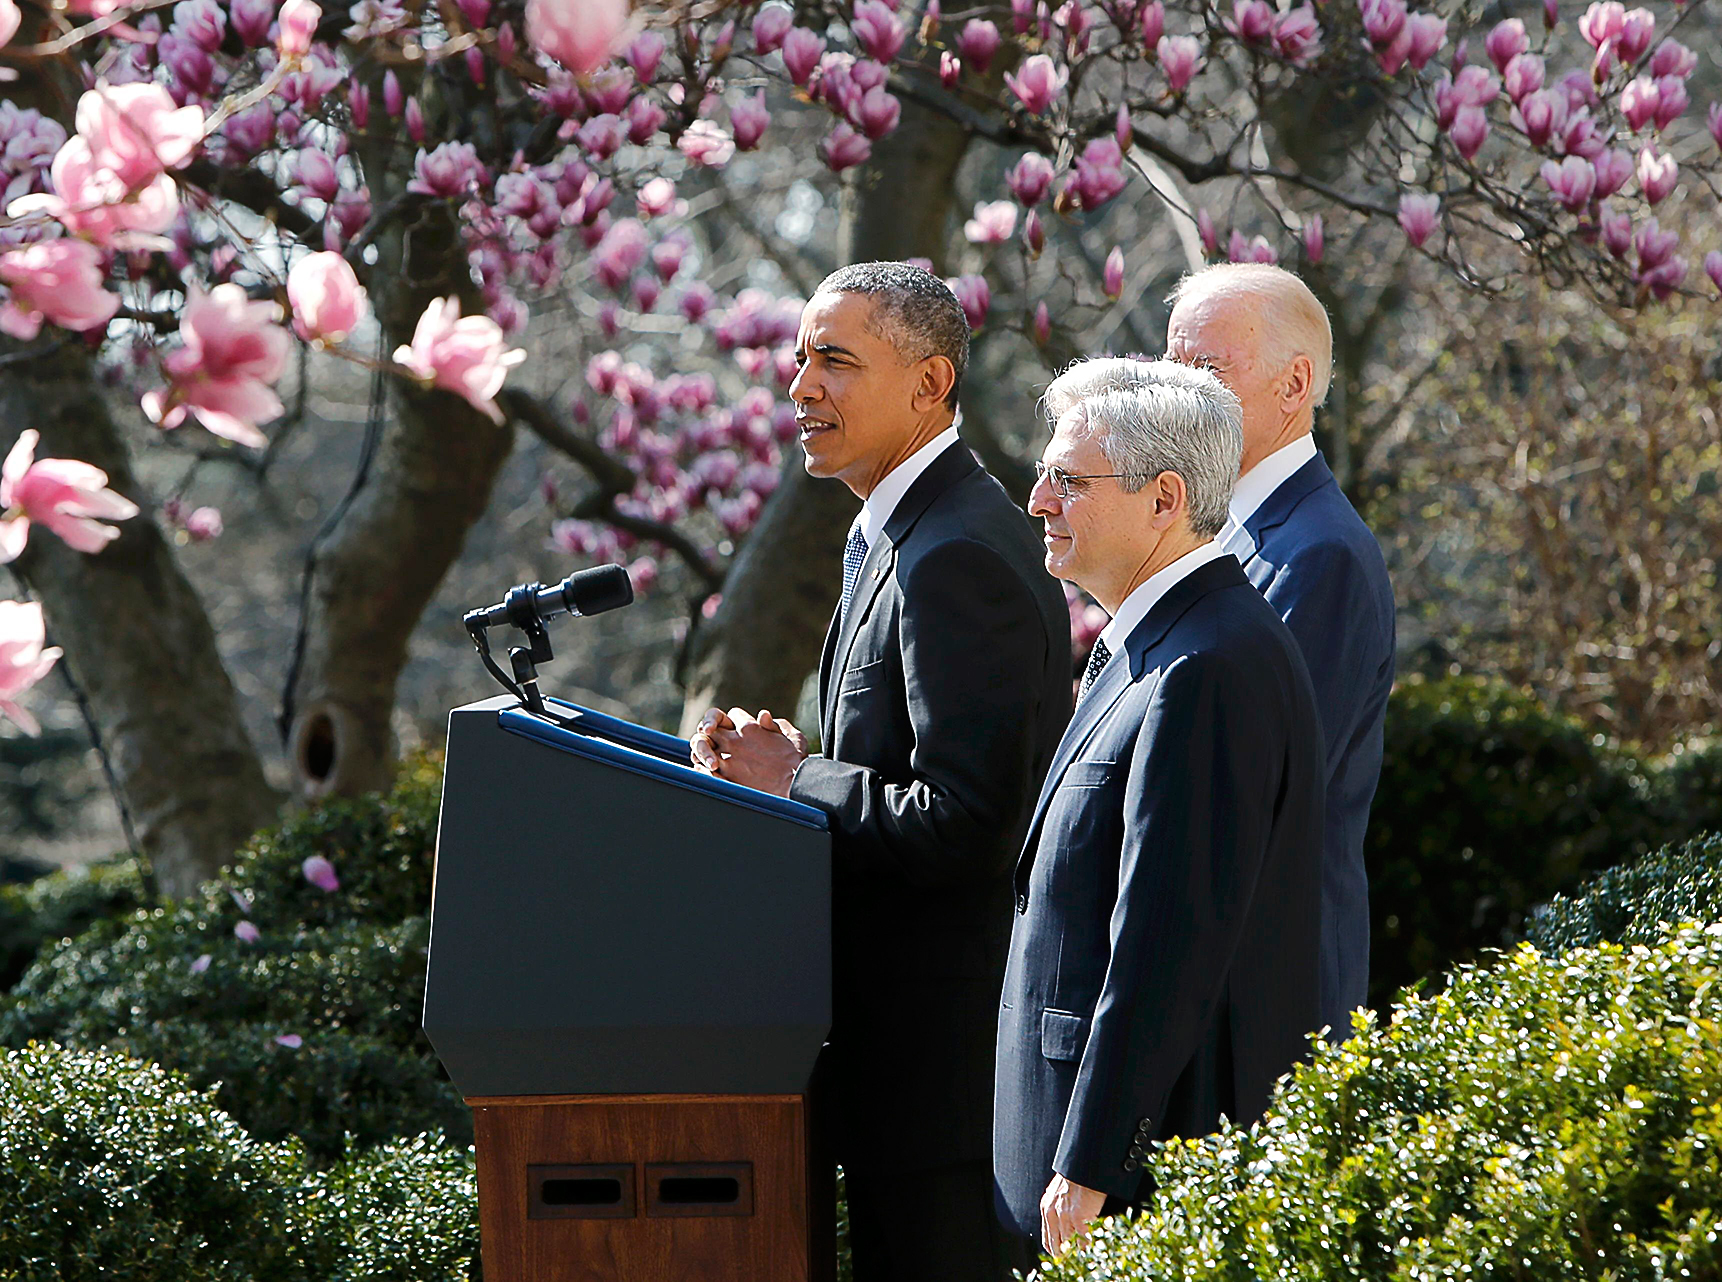 Chief DC Circuit Judge Merrick Garland (center) is Obama’s third nominee to the Supreme Court